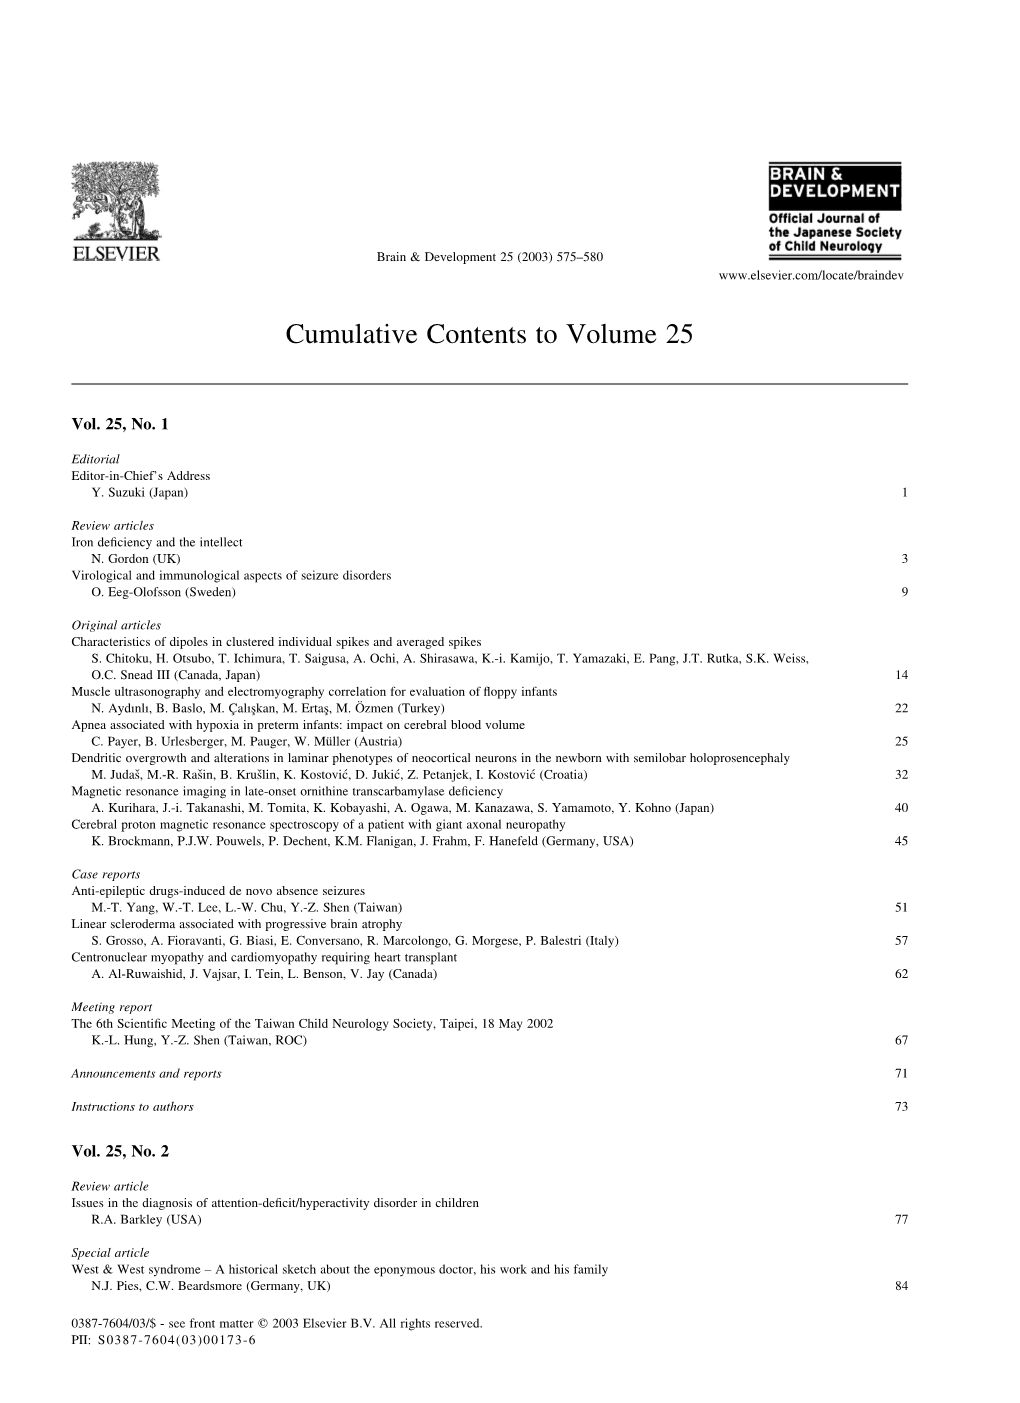 Cumulative Contents to Volume 25